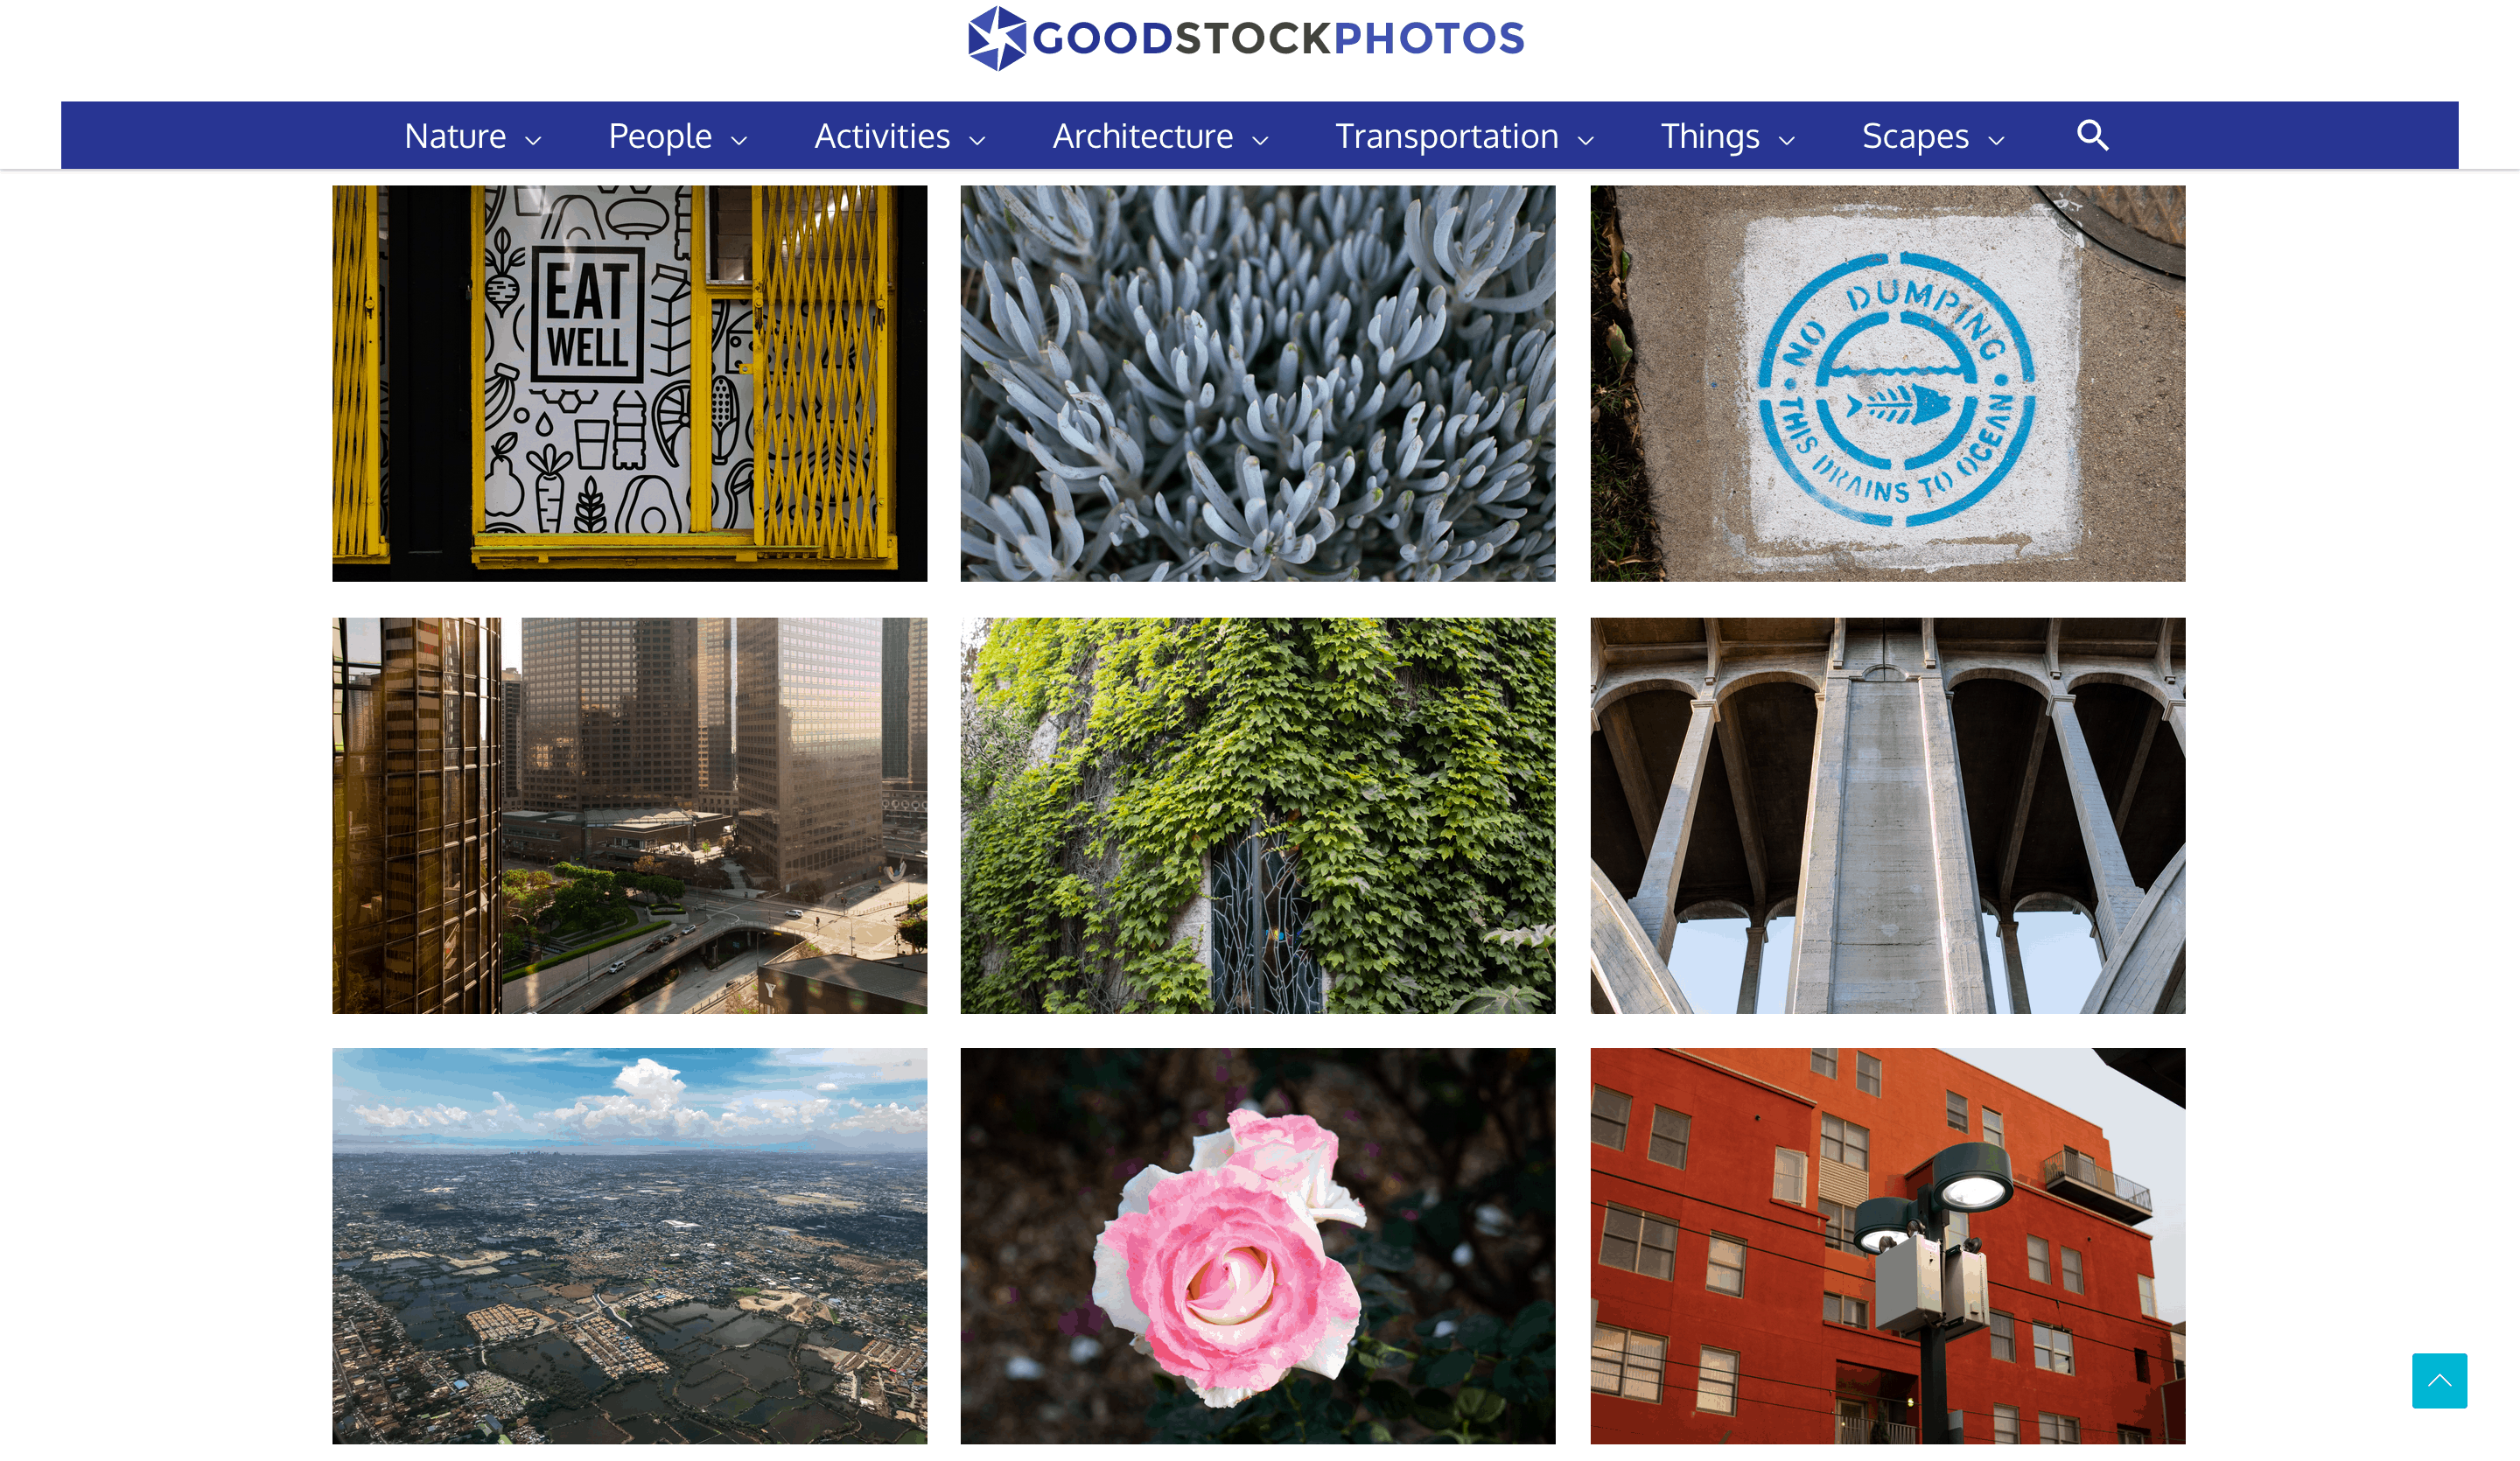 The Good Stock Photos website.